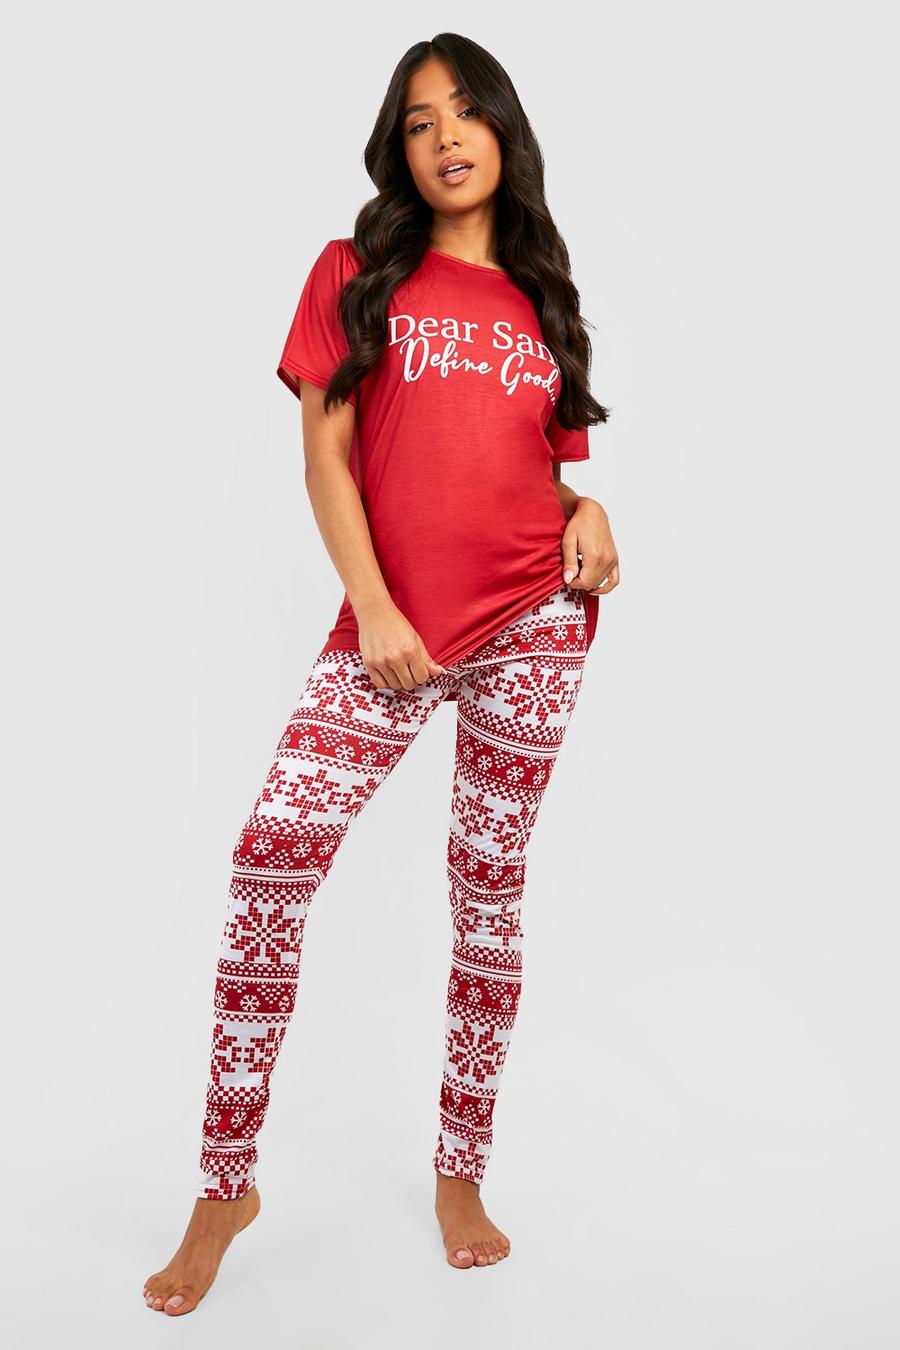 Pijama Petite navideño con eslogan Dear Santa, Red